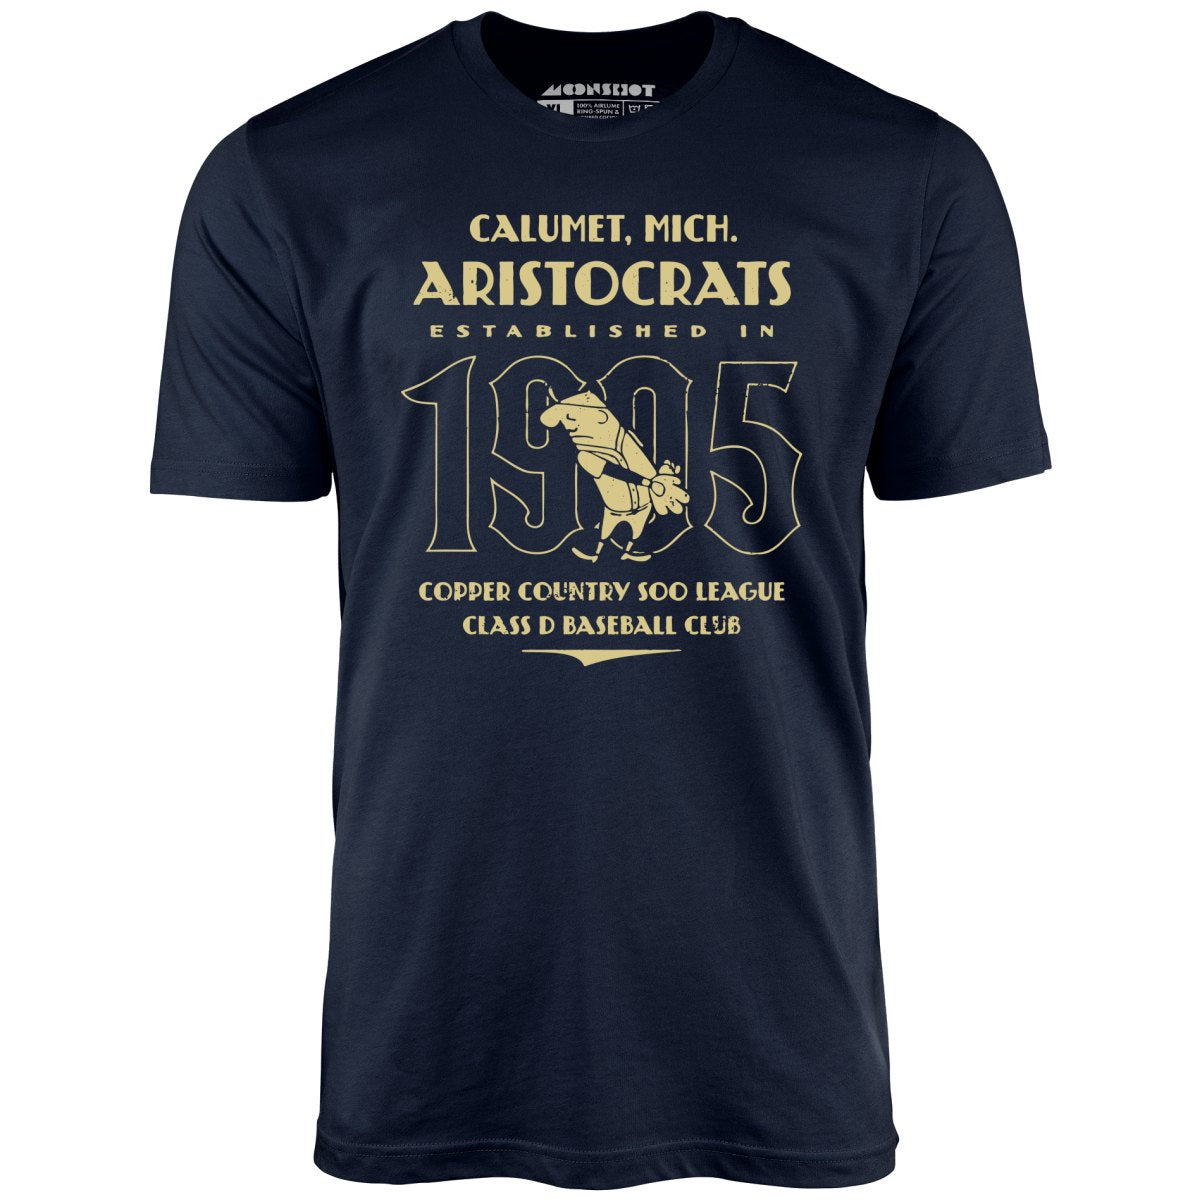 Calumet Aristocrats - Michigan - Vintage Defunct Baseball Teams - Unisex T-Shirt